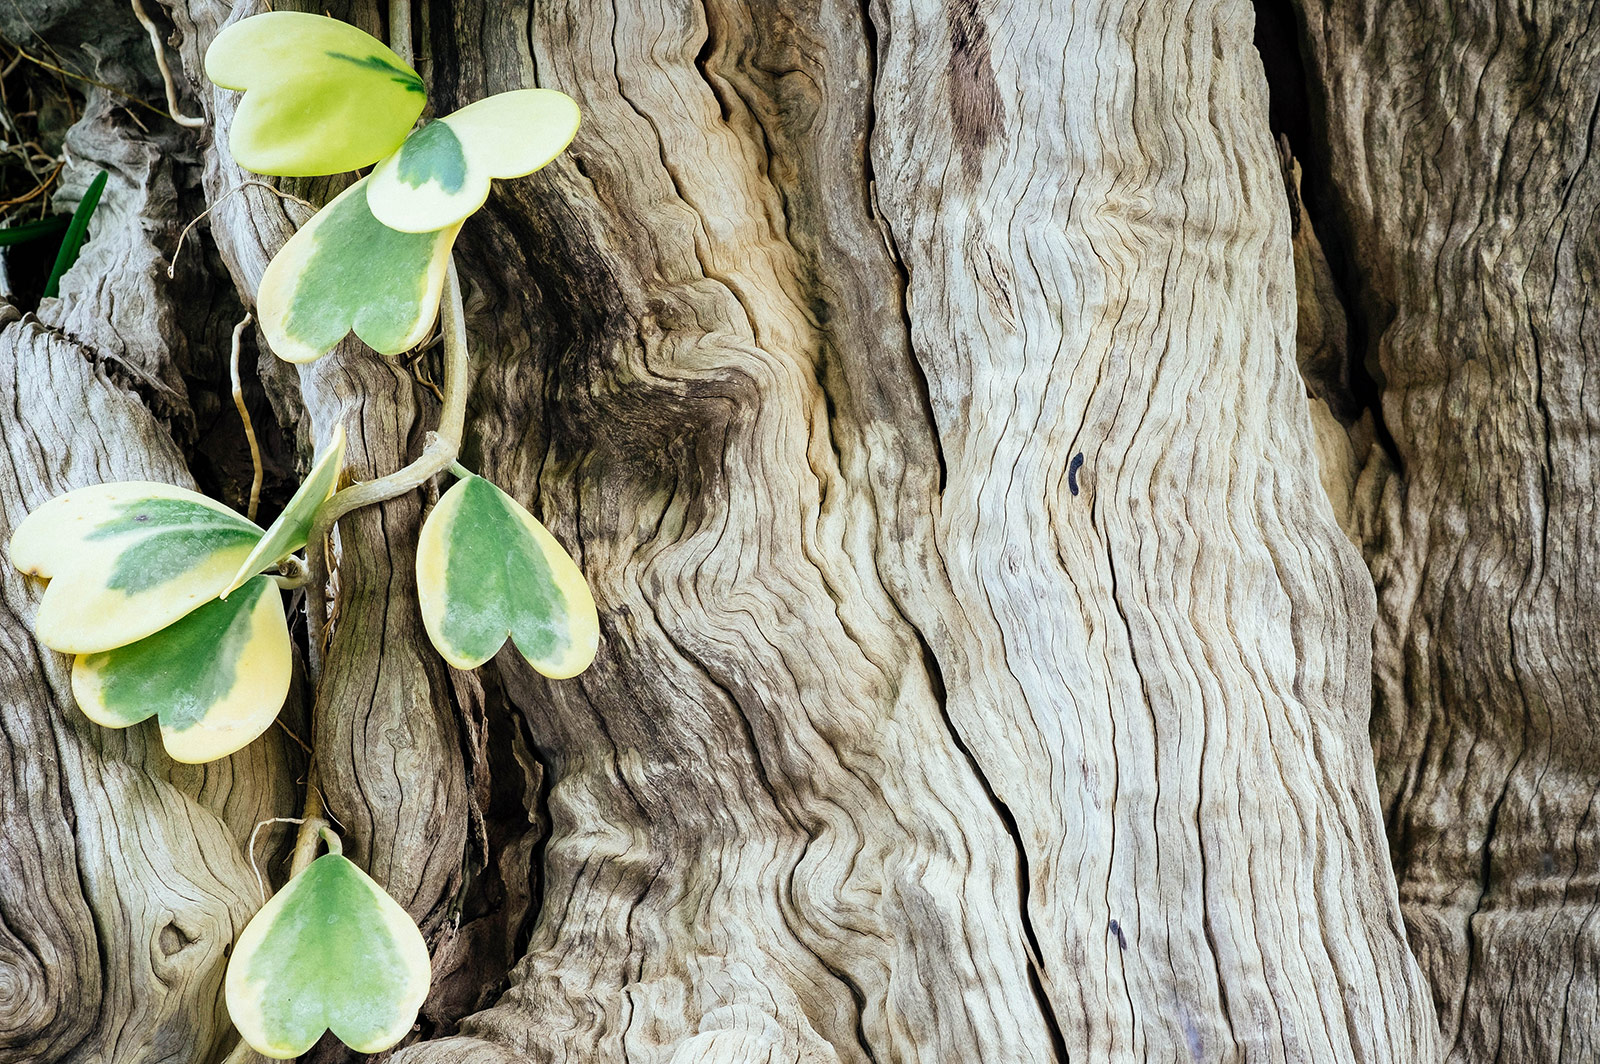 Hoya kerrii plant vining up a tree trunk